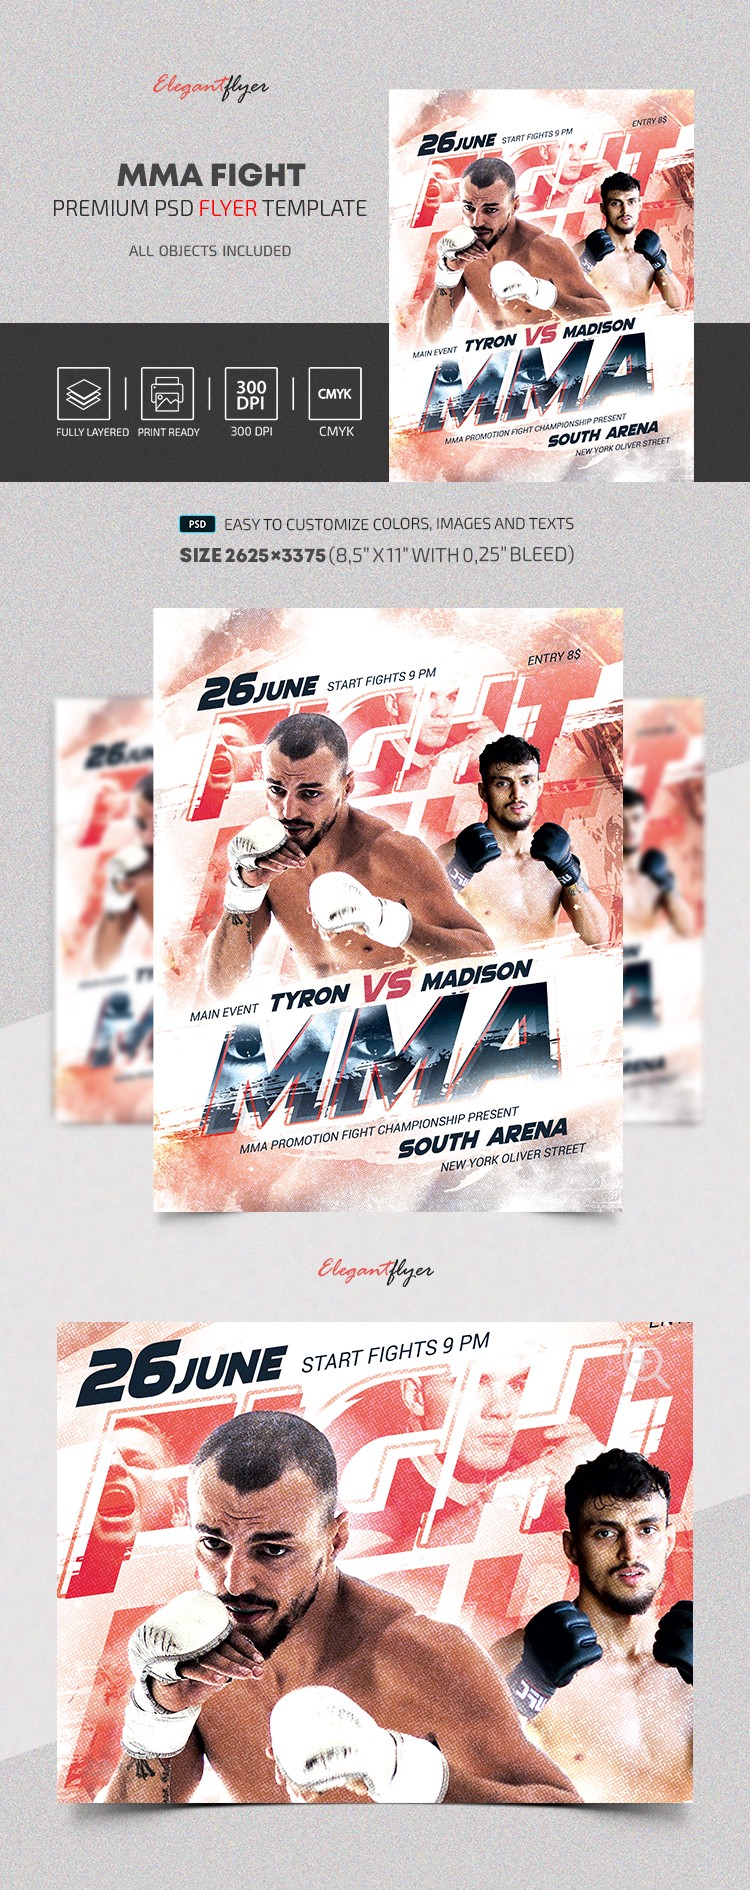 MMA Fight Flyer by ElegantFlyer